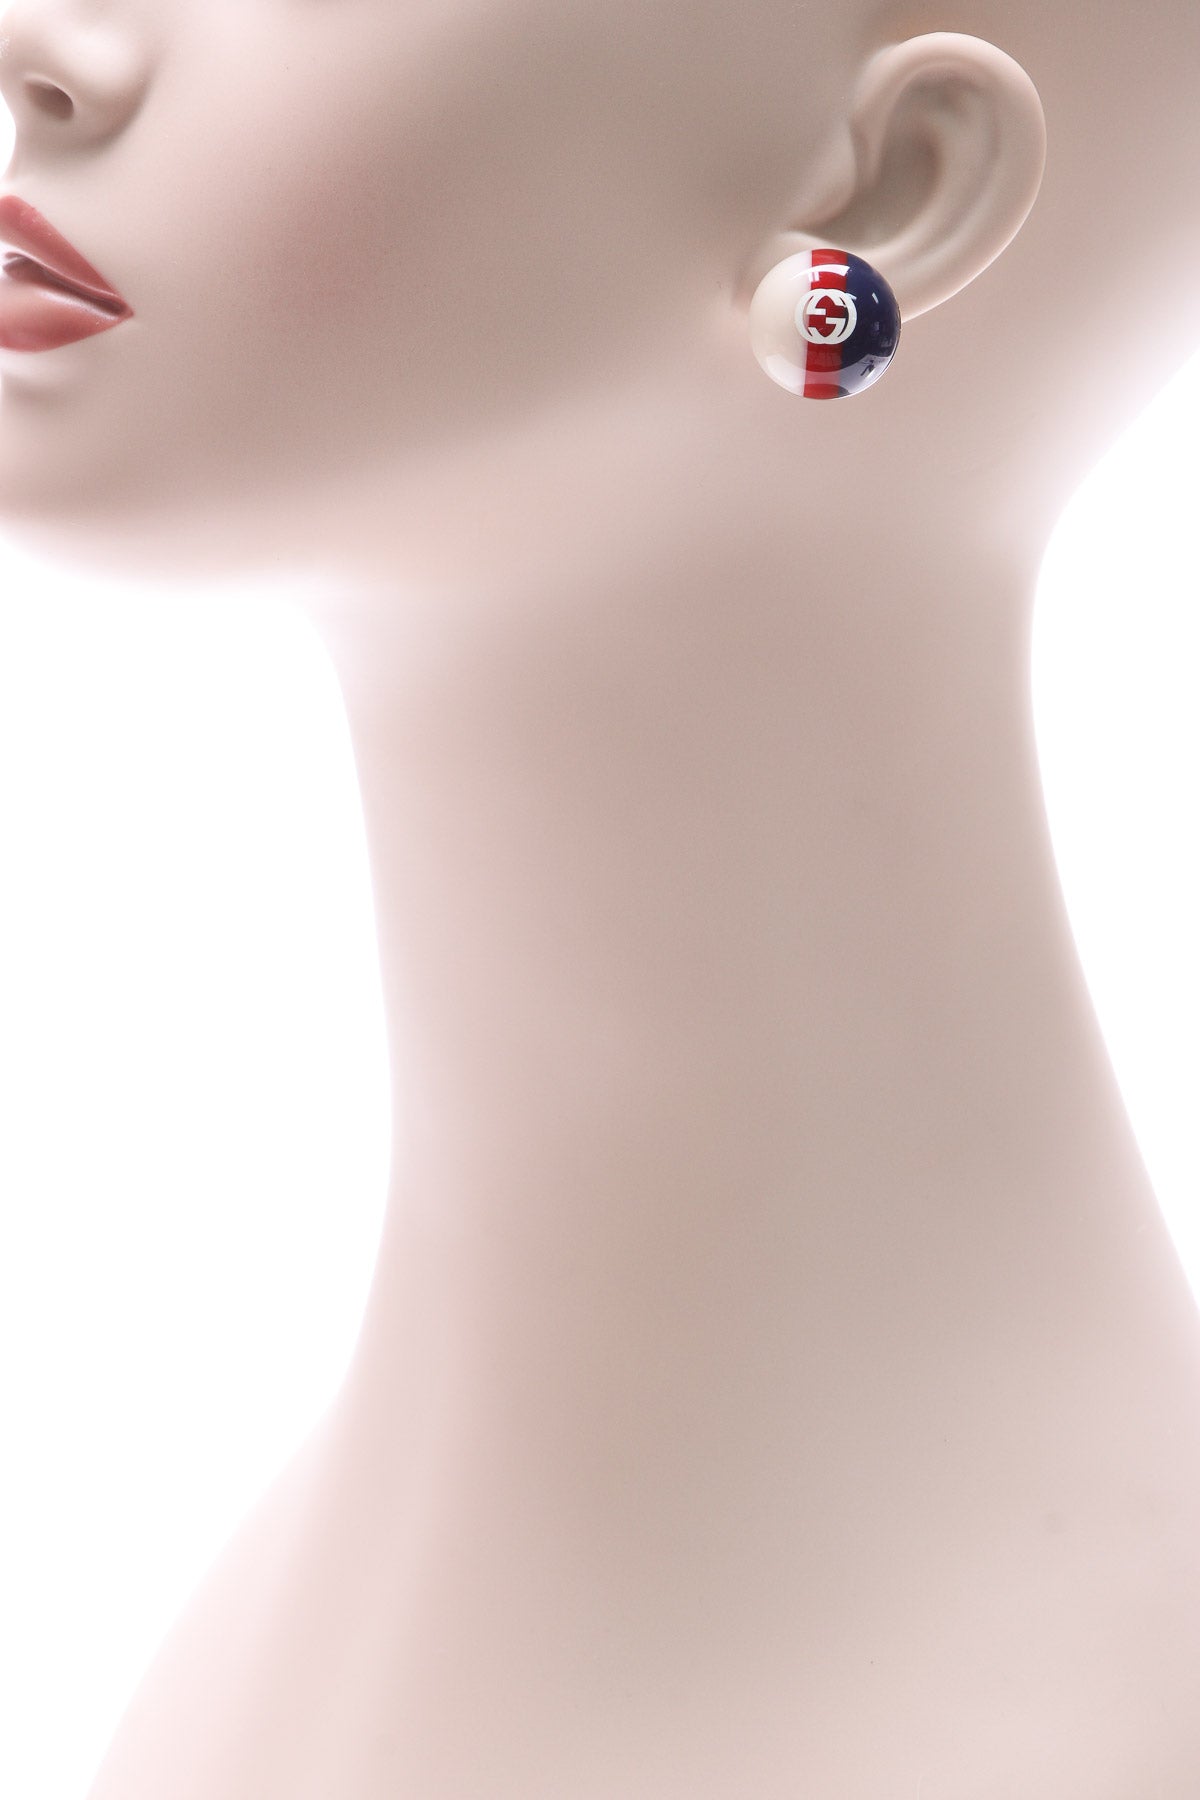 Louis Vuitton Diamond White Gold Earrings – Opulent Jewelers